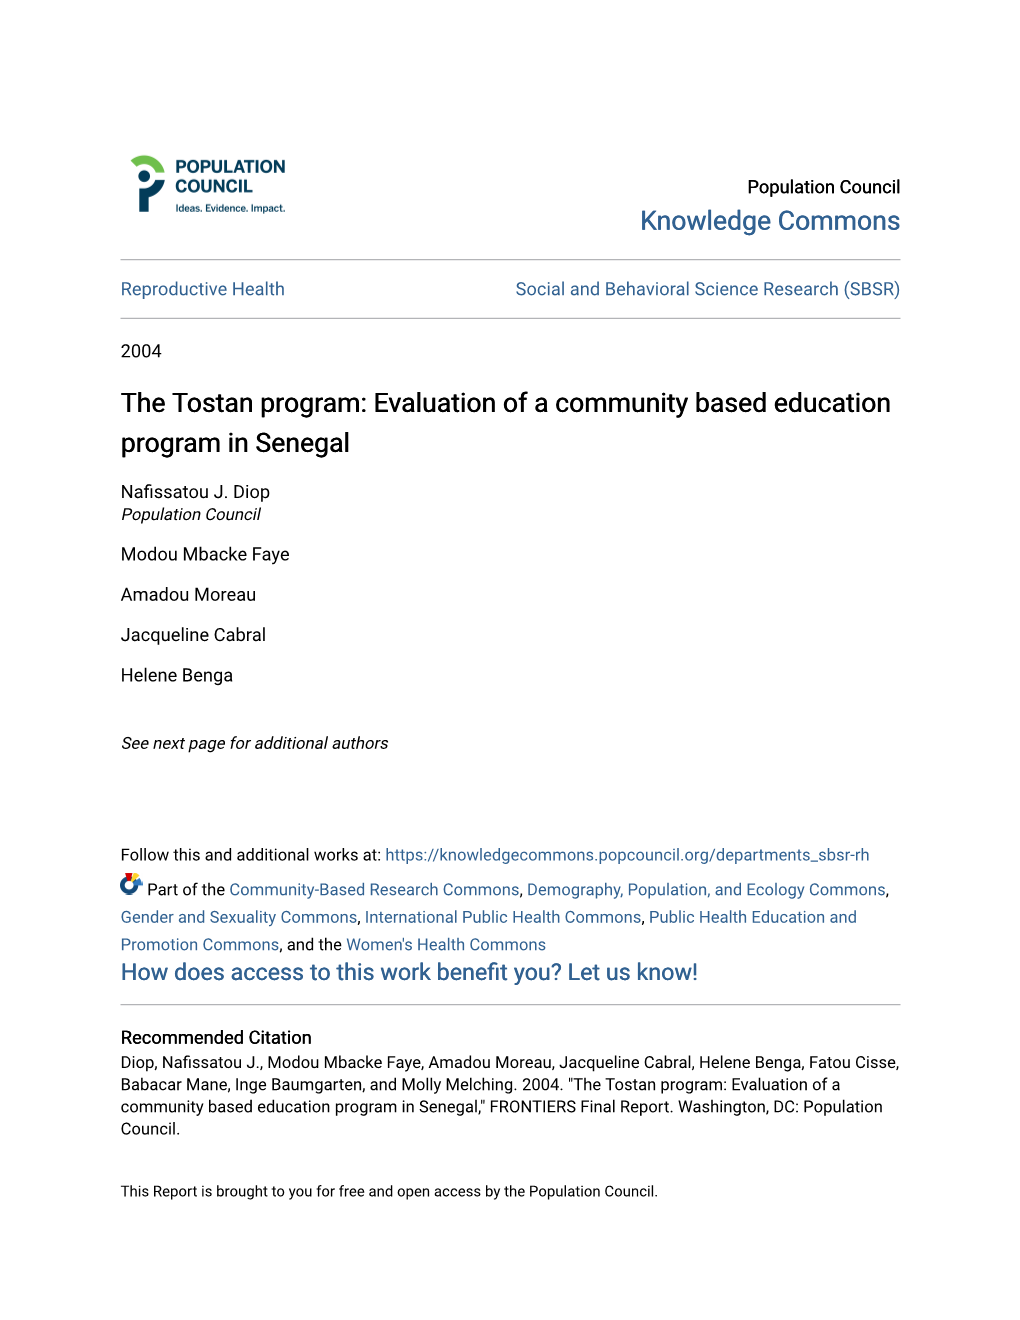 The Tostan Program: Evaluation of a Community Based Education Program in Senegal